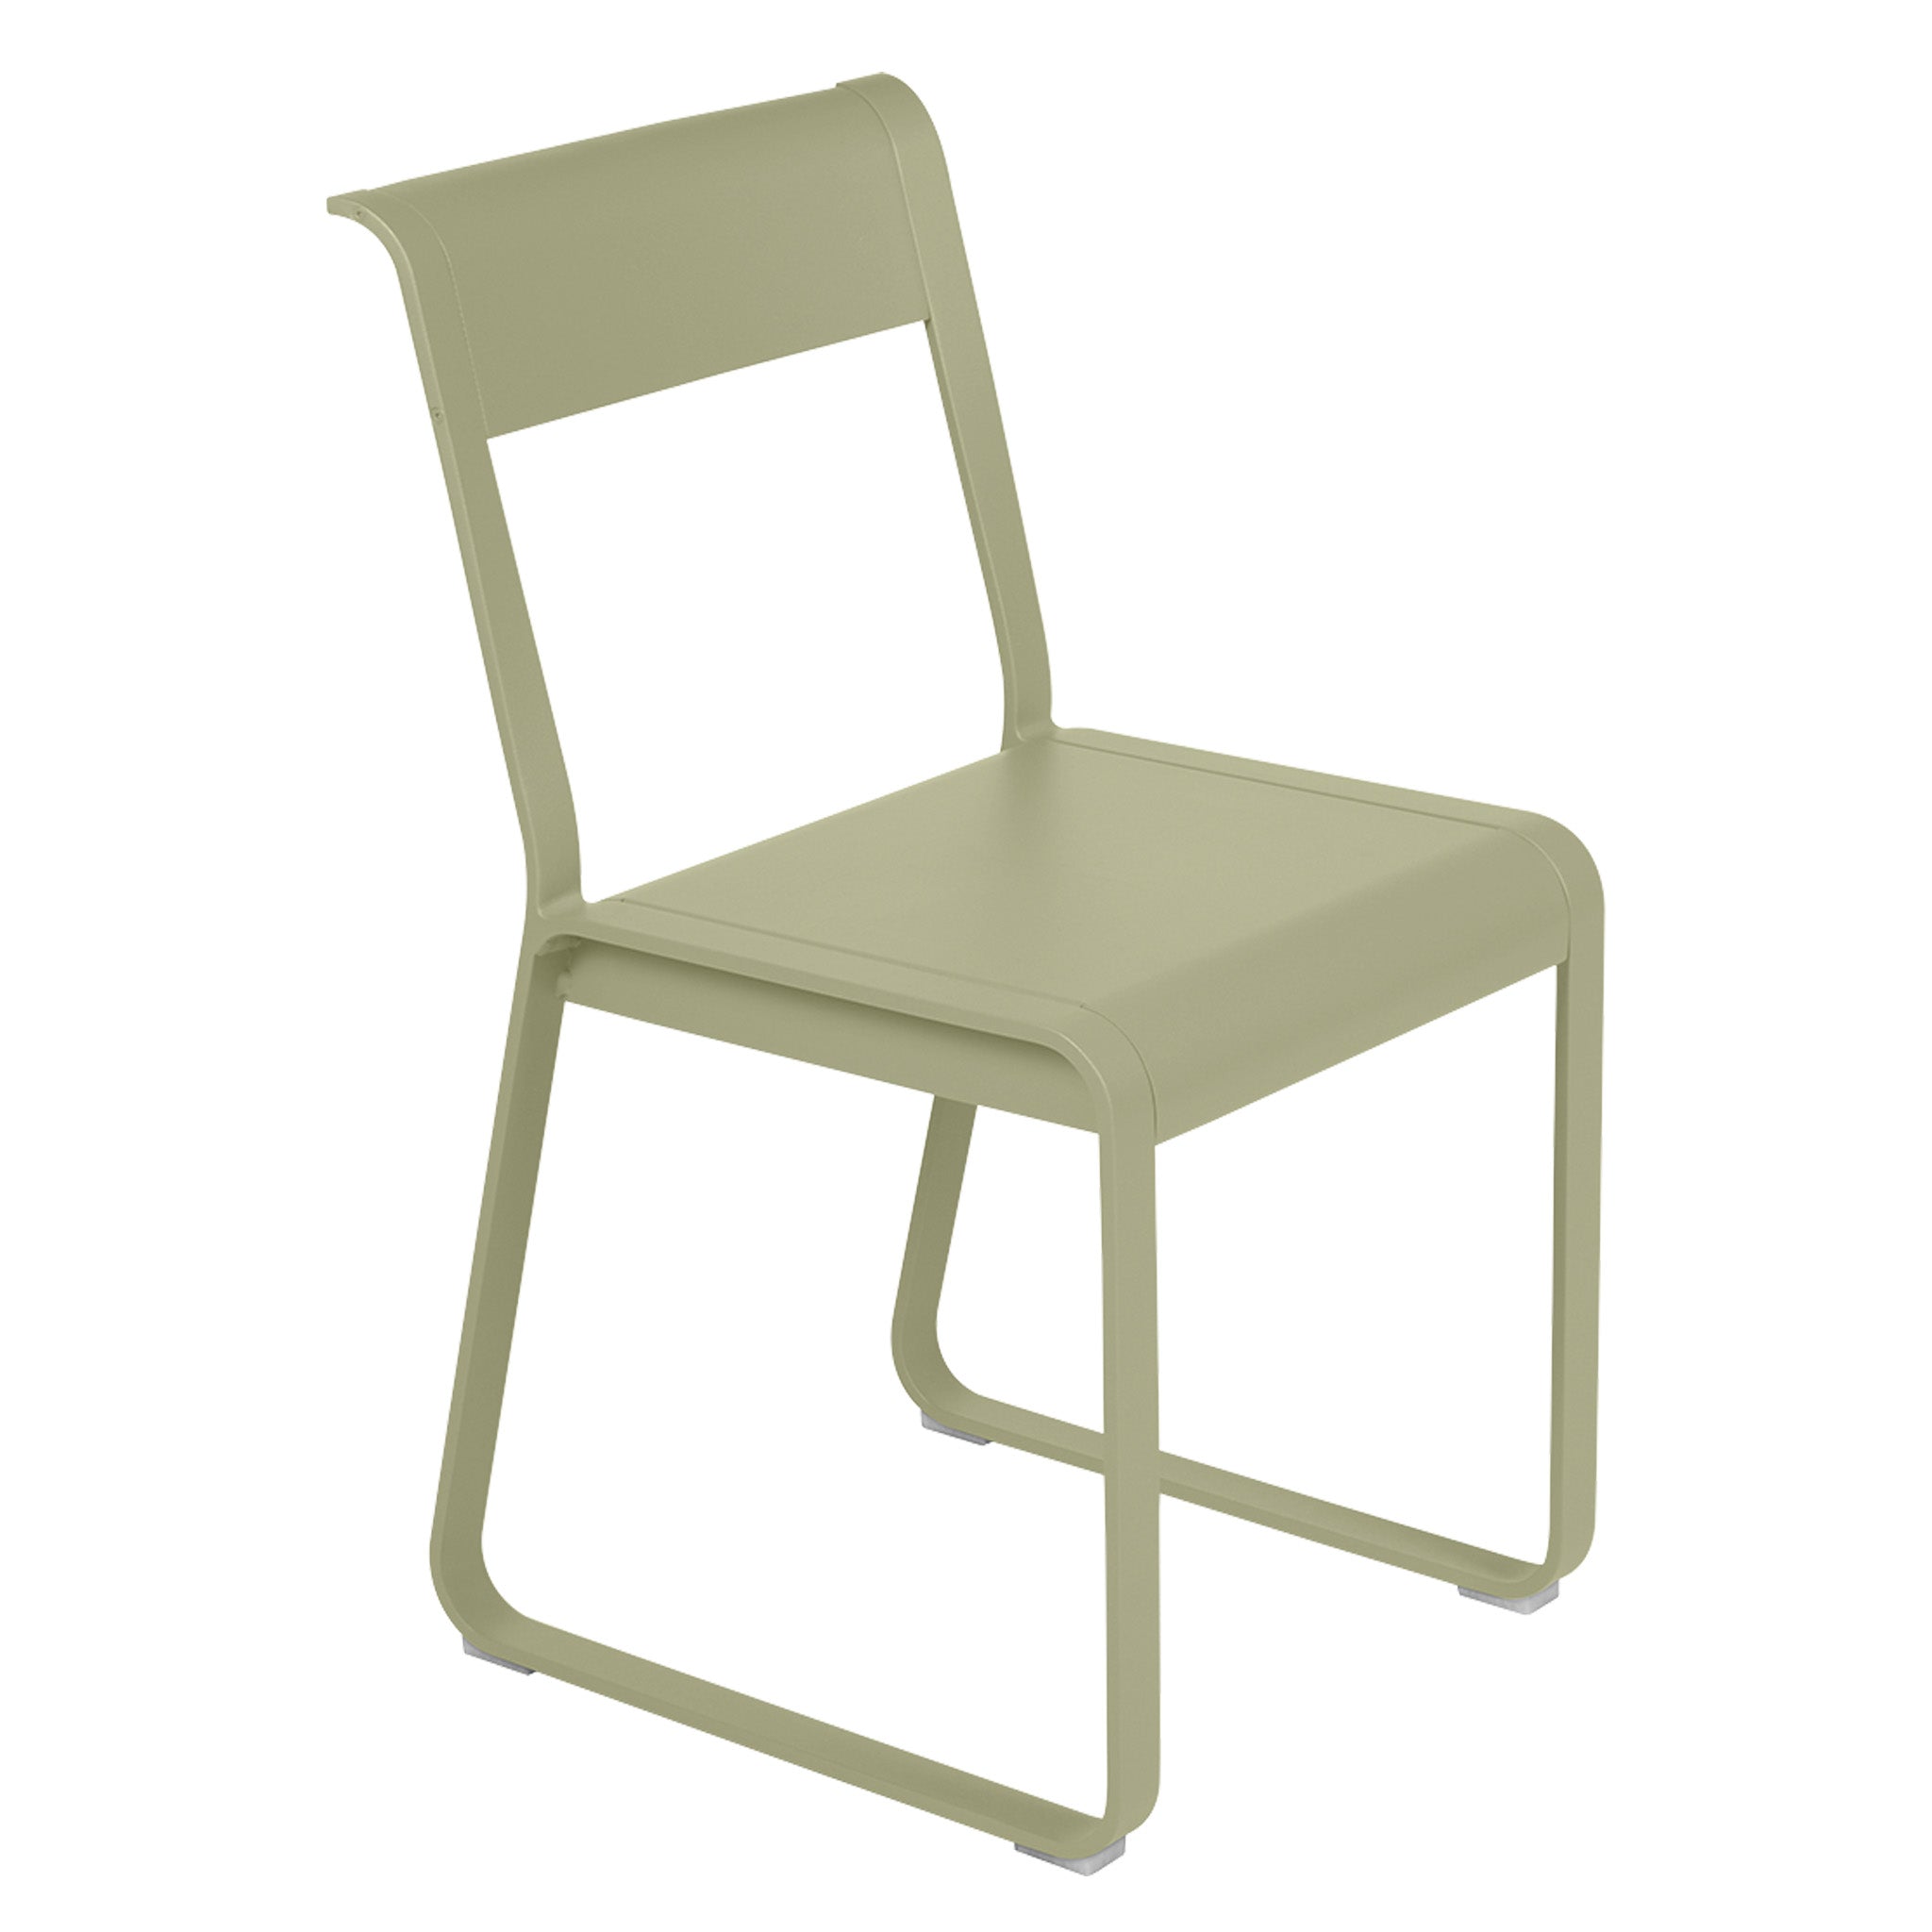 Bellevie Chair v2 by Fermob